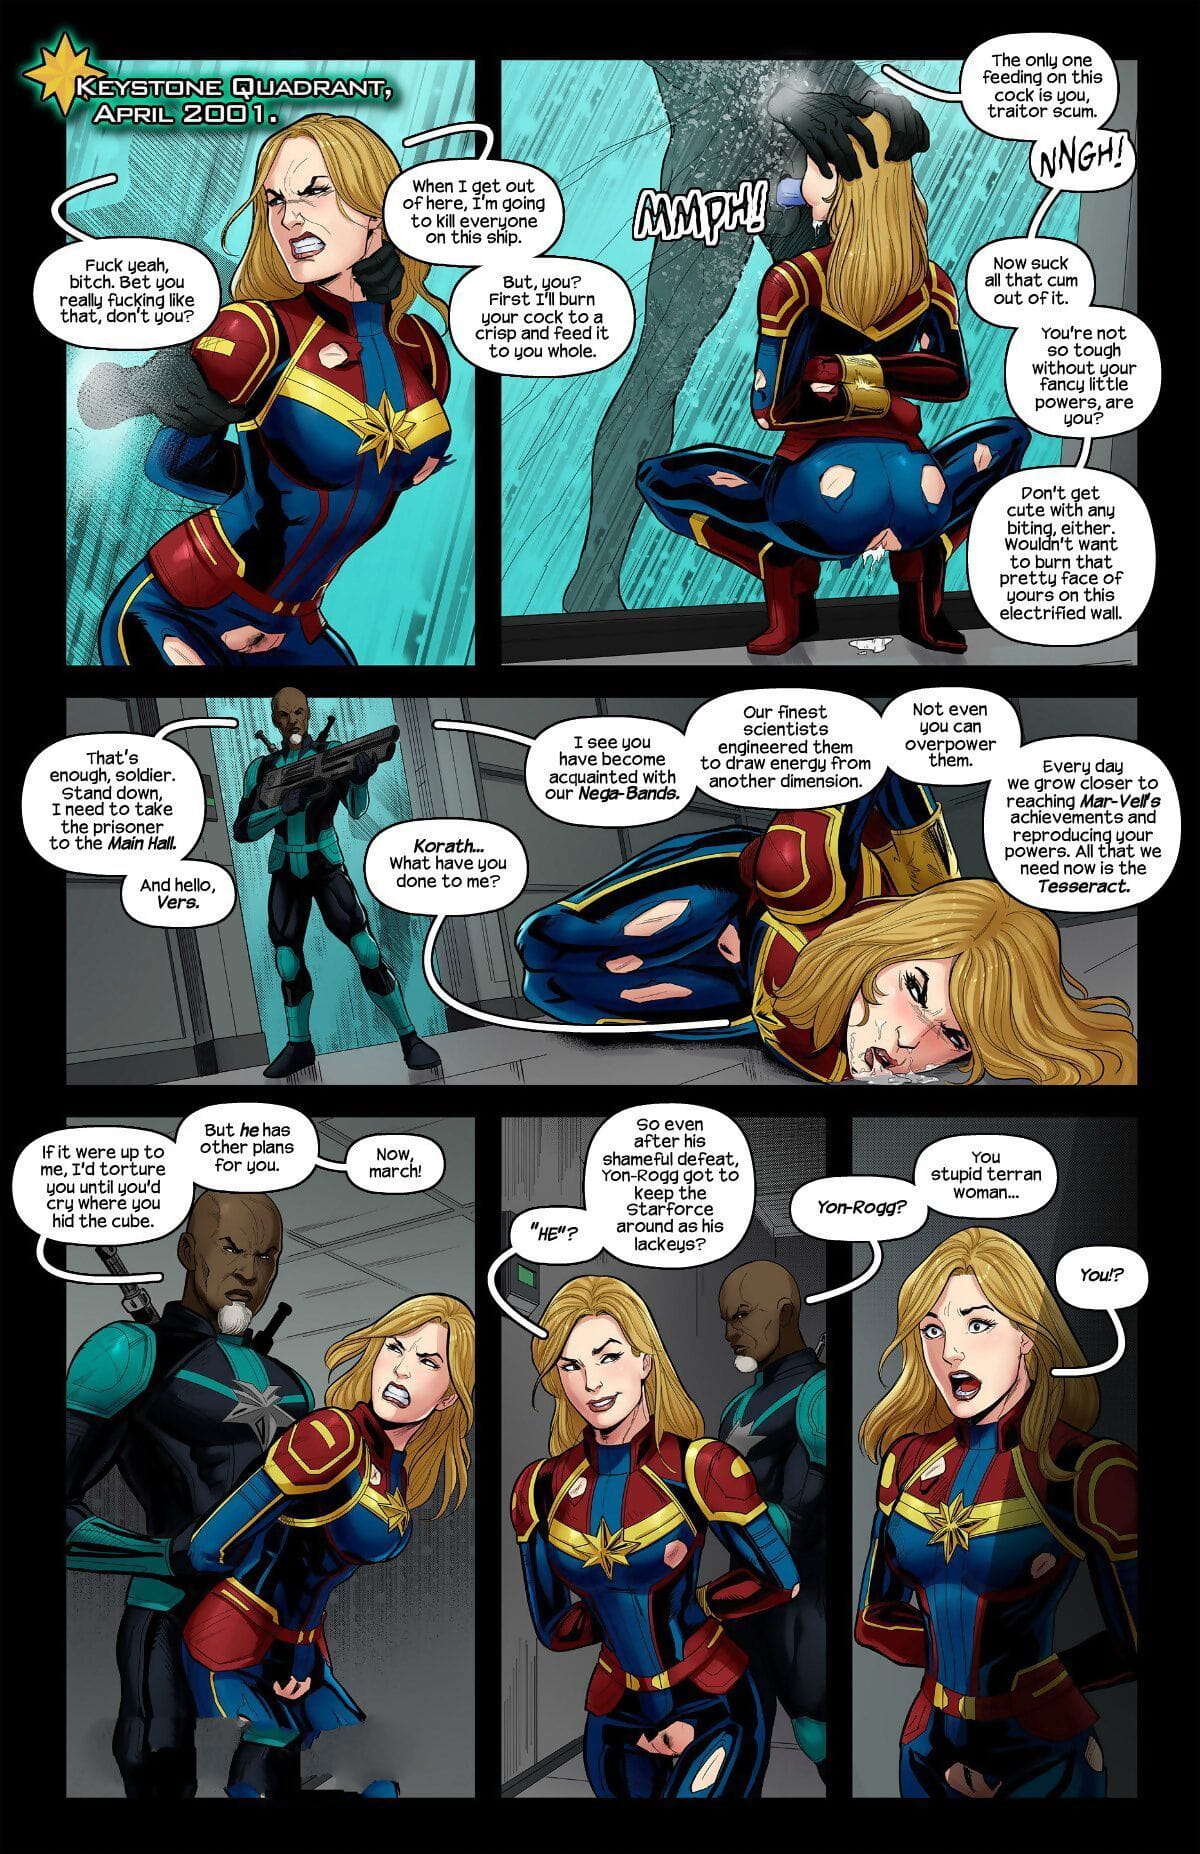 Tracy szufelki kapitan Marvel oskarżony page 1